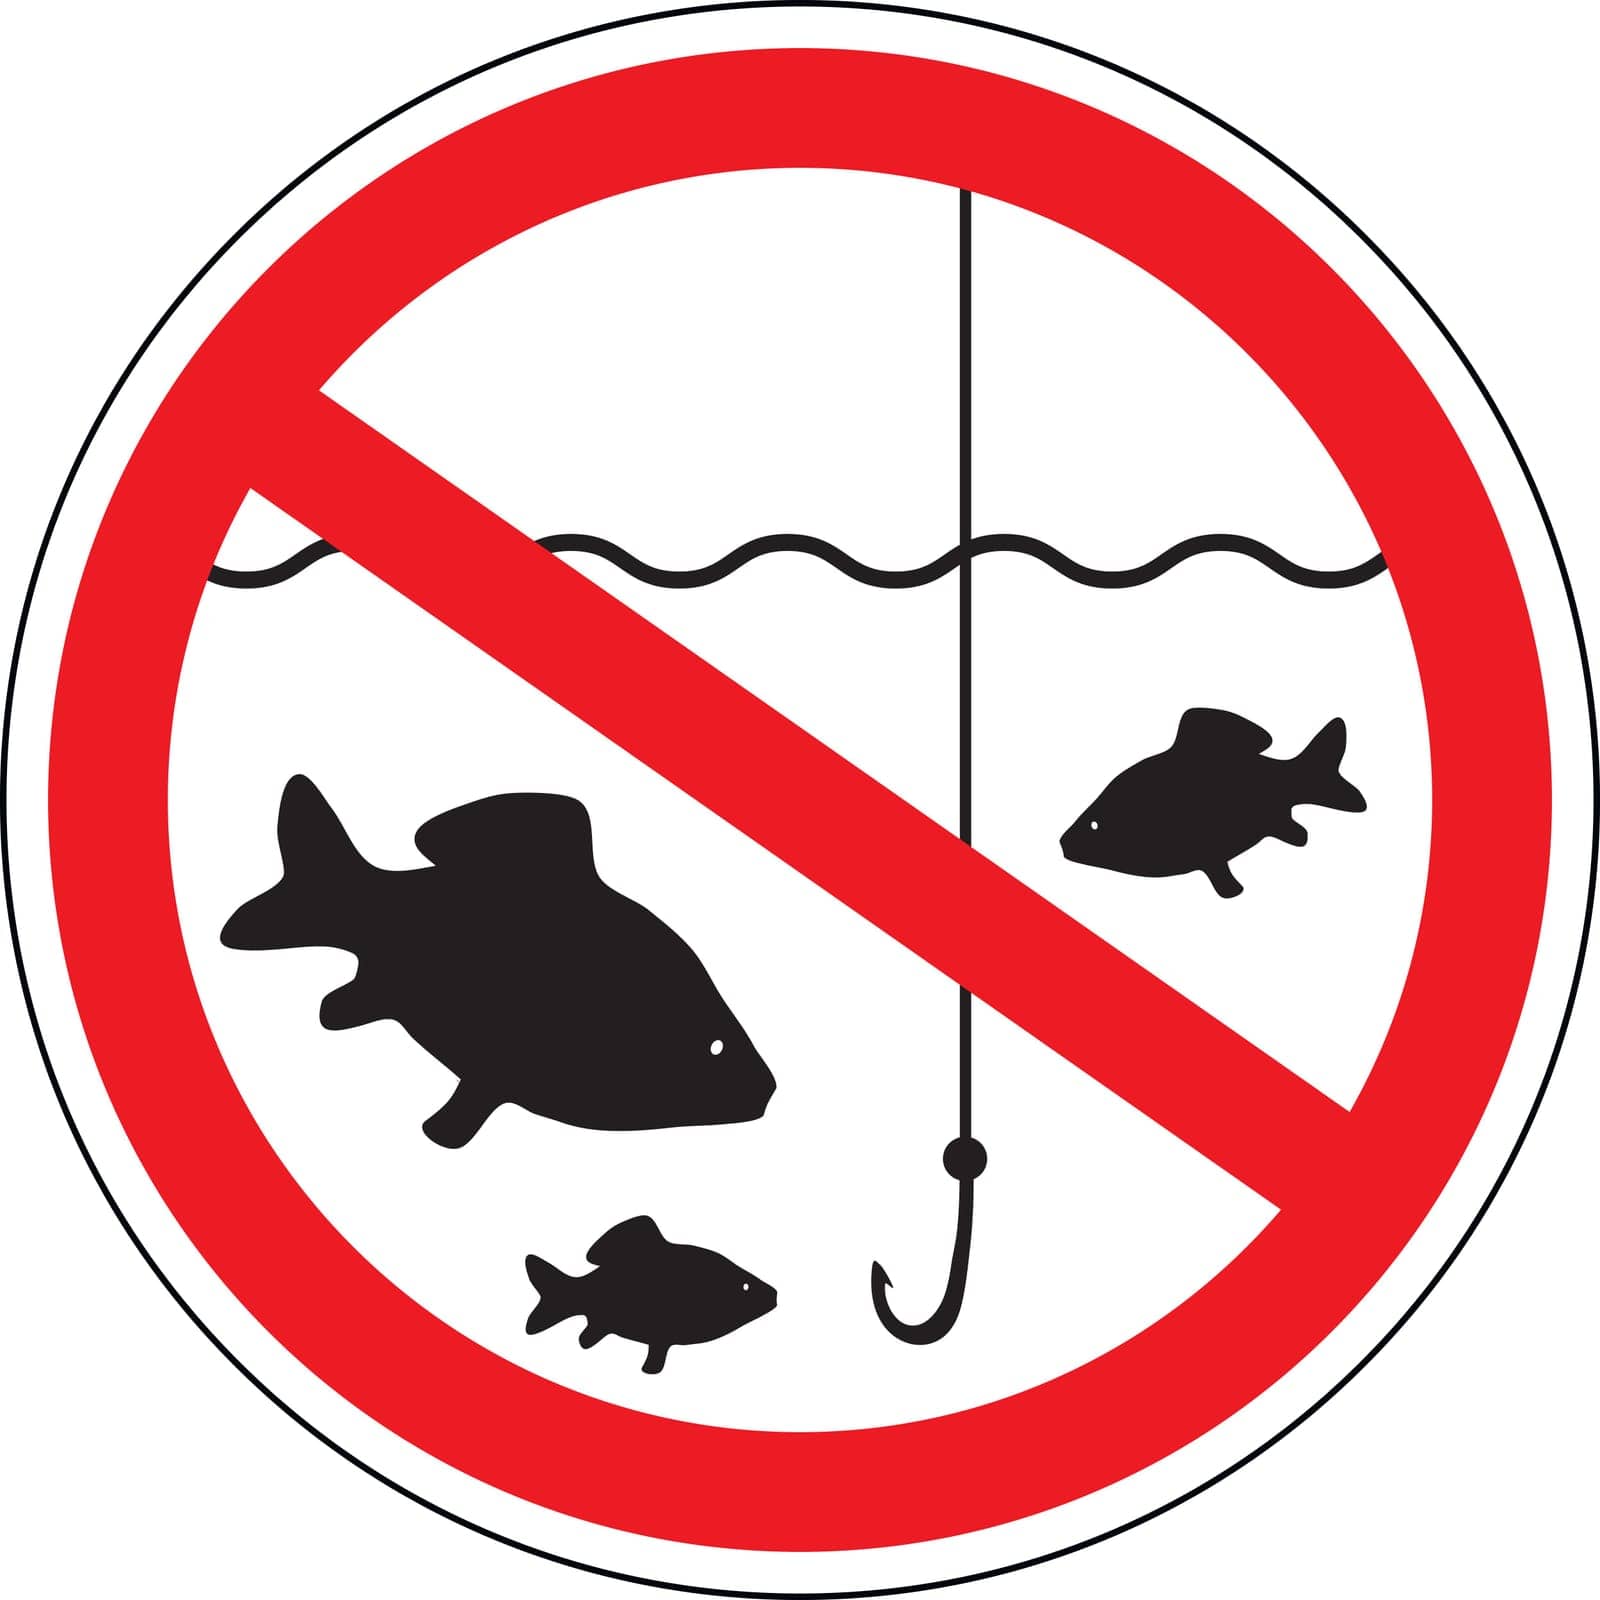 Sign time spawning, fishing prohibited, fish not catch by koksikoks